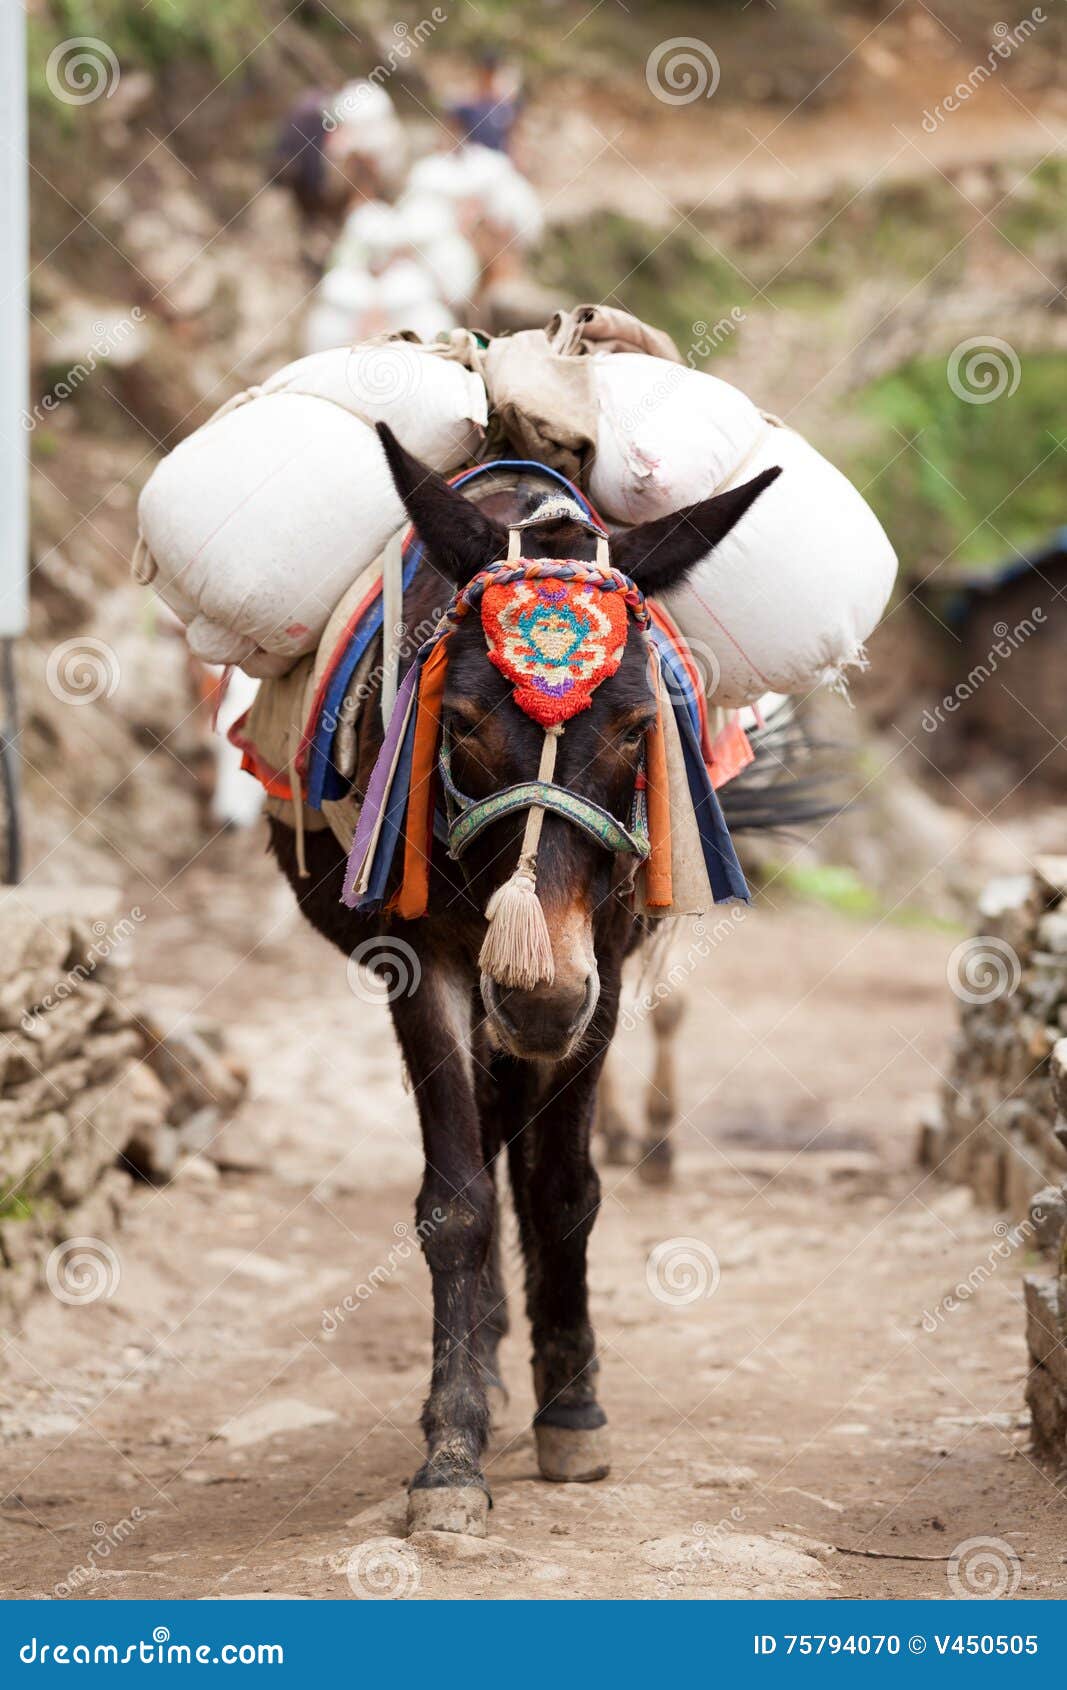 close-up of an mule caravan, dudh kosi valley, solu khumbu, nepal